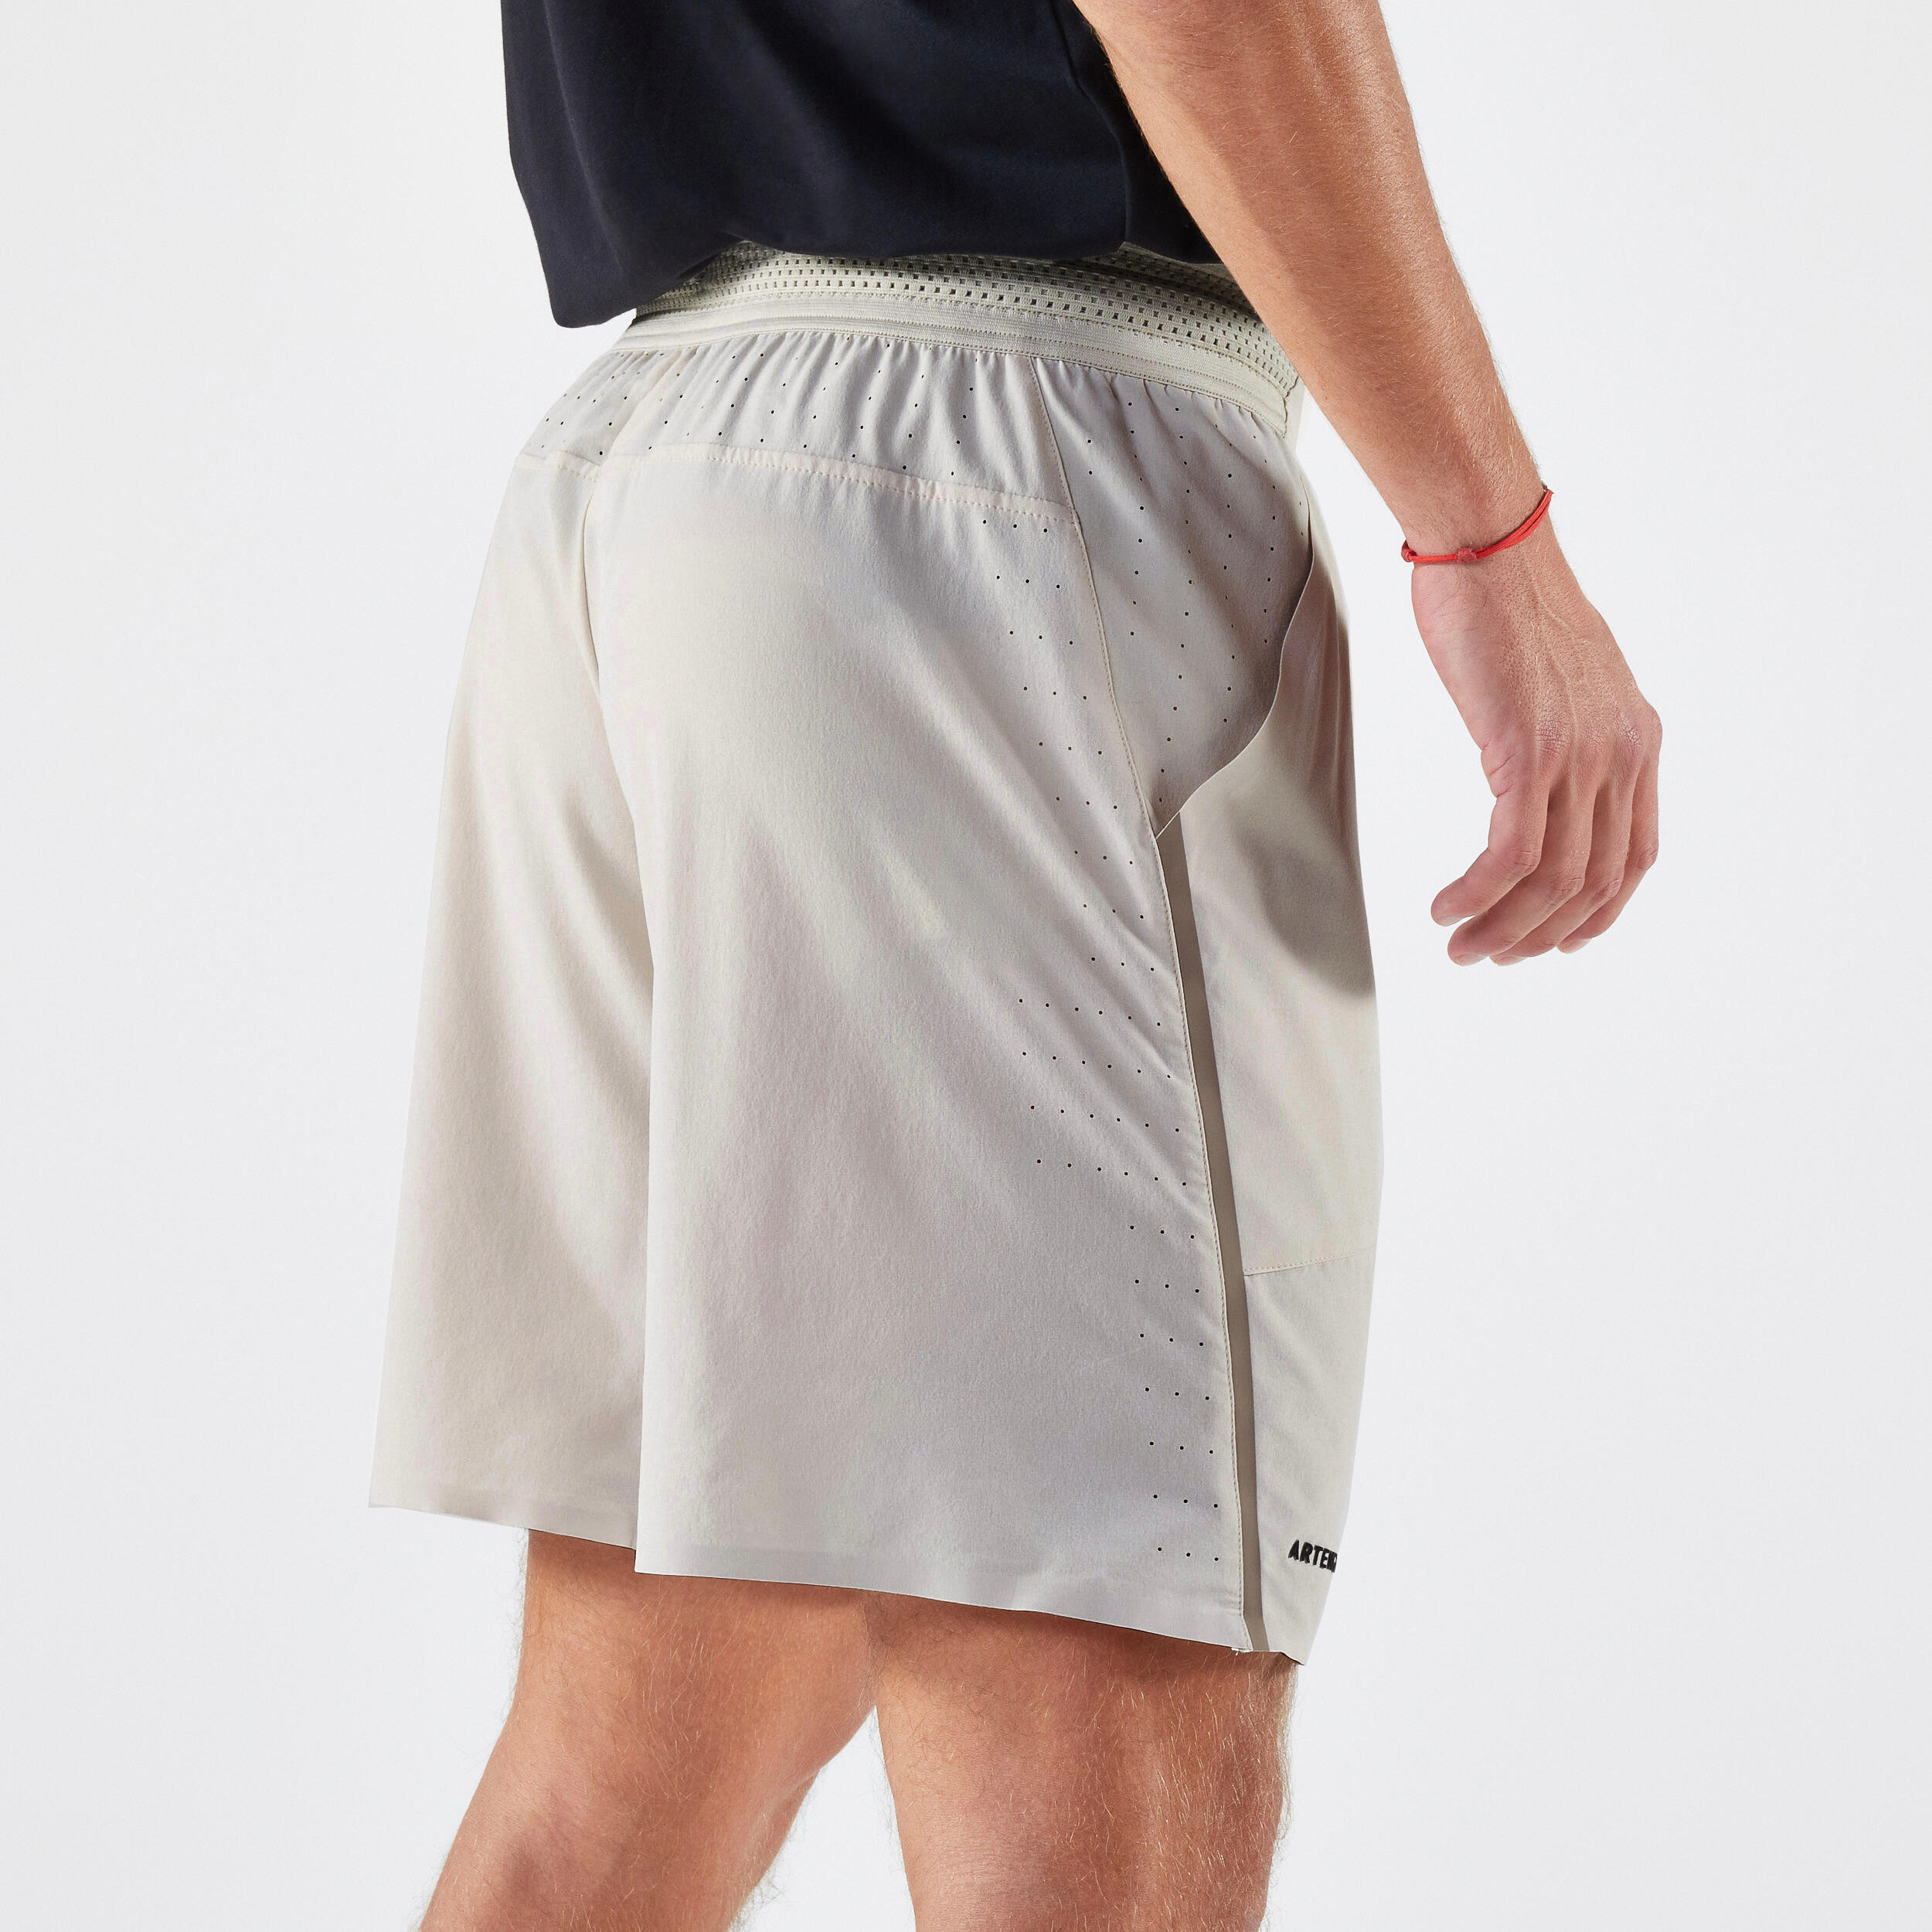 Men's Breathable Tennis Shorts Dry+ Gaël Monfils - Beige 2/7